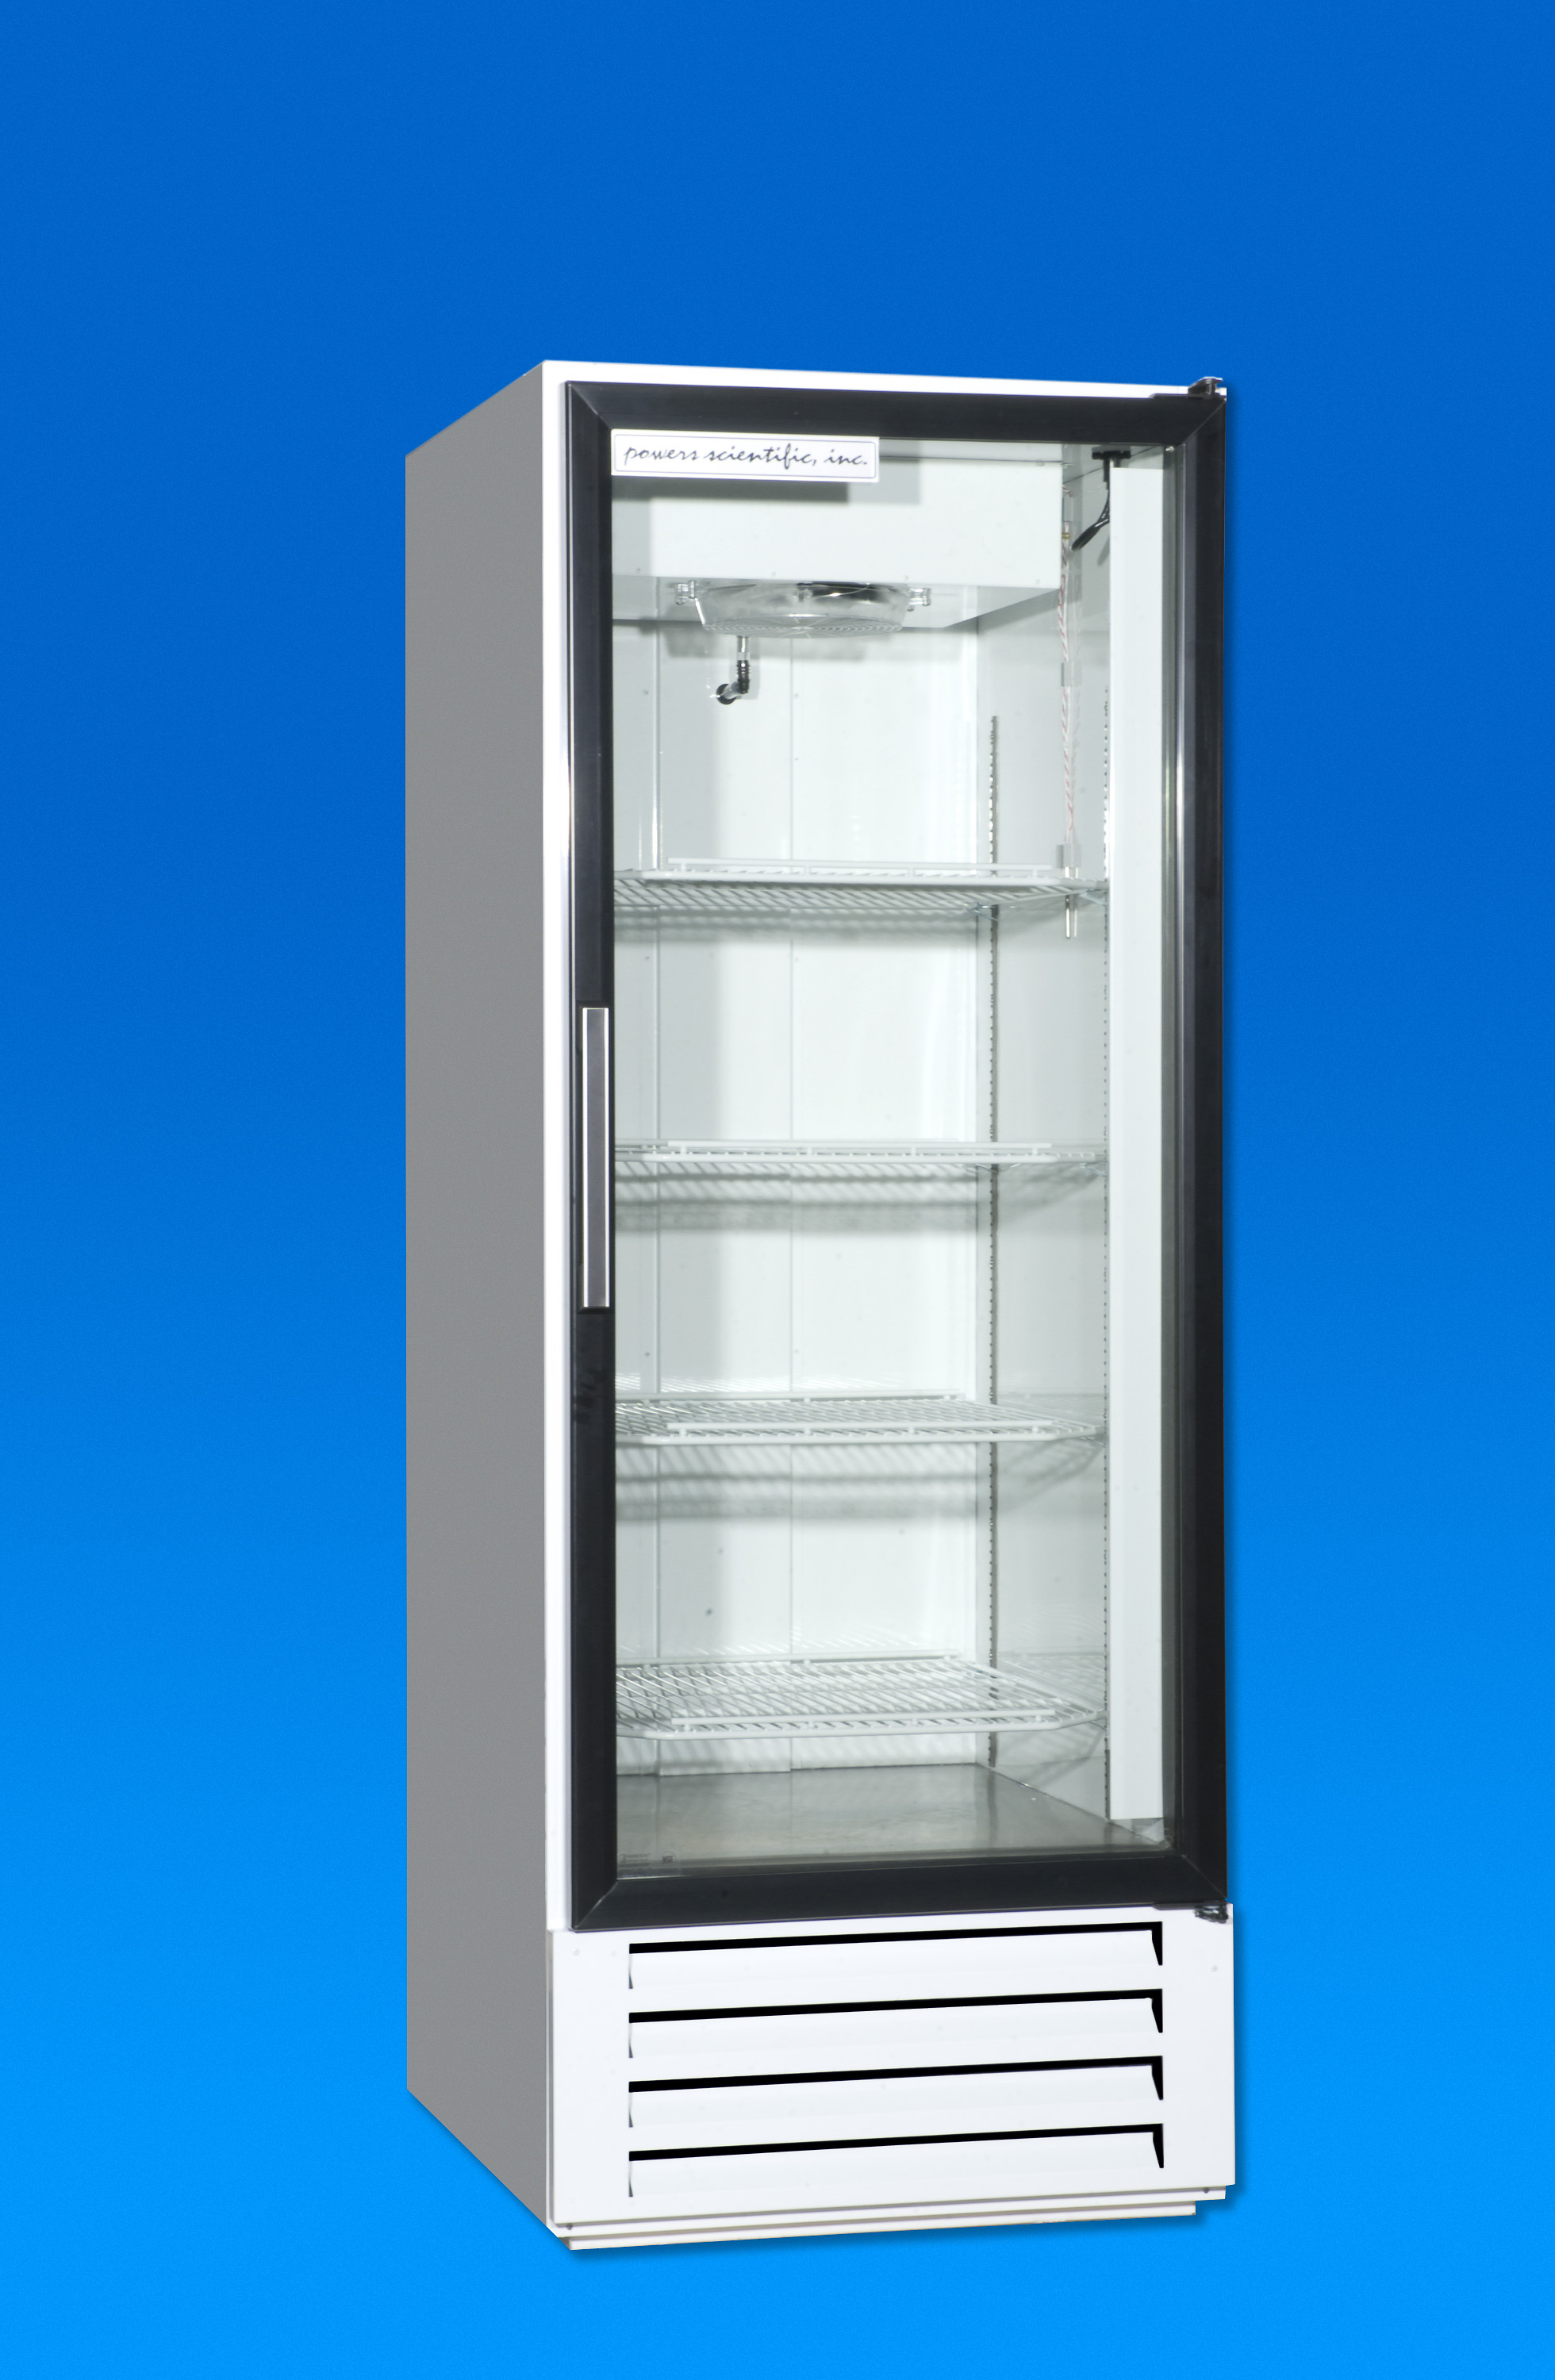 Powers Scientific LS28SSD lab refrigerator